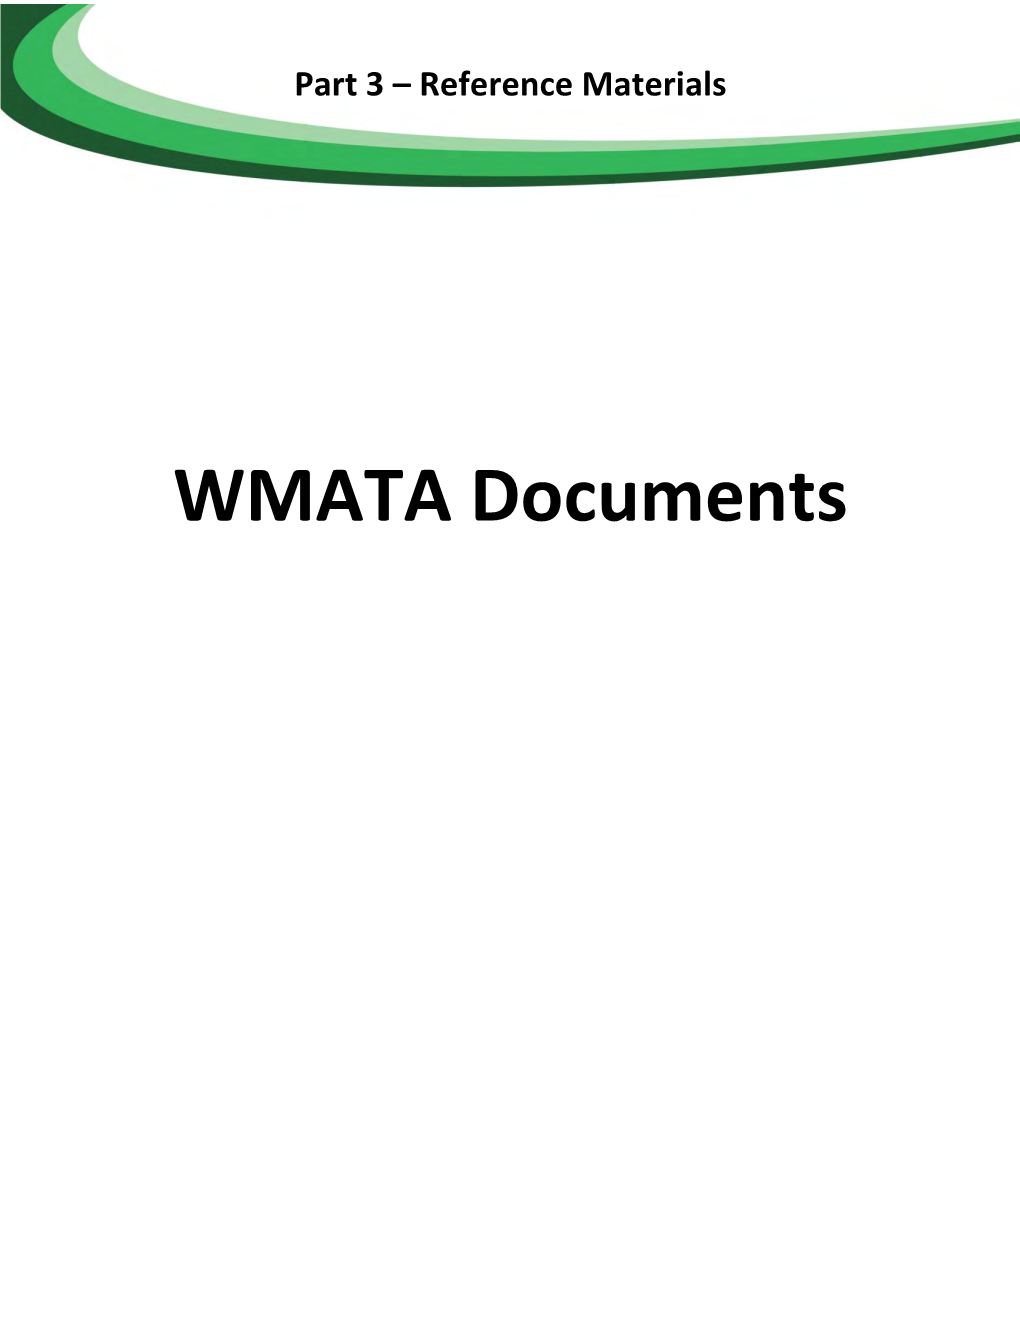 WMATA Documents